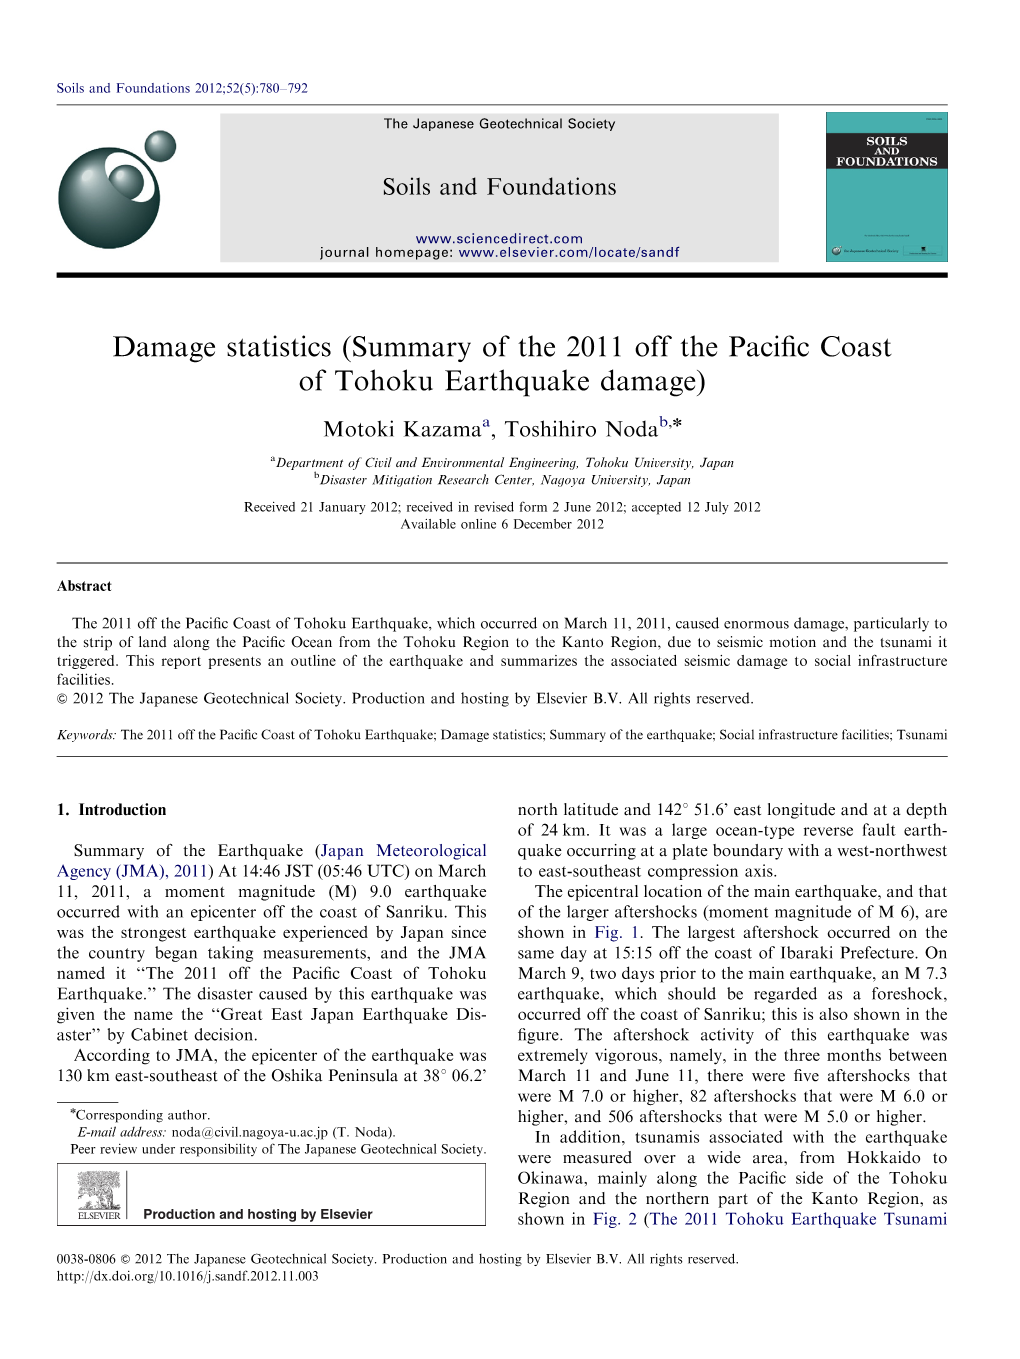 Summary of the 2011 Off the Pacific Coast of Tohoku Earthquake Damage